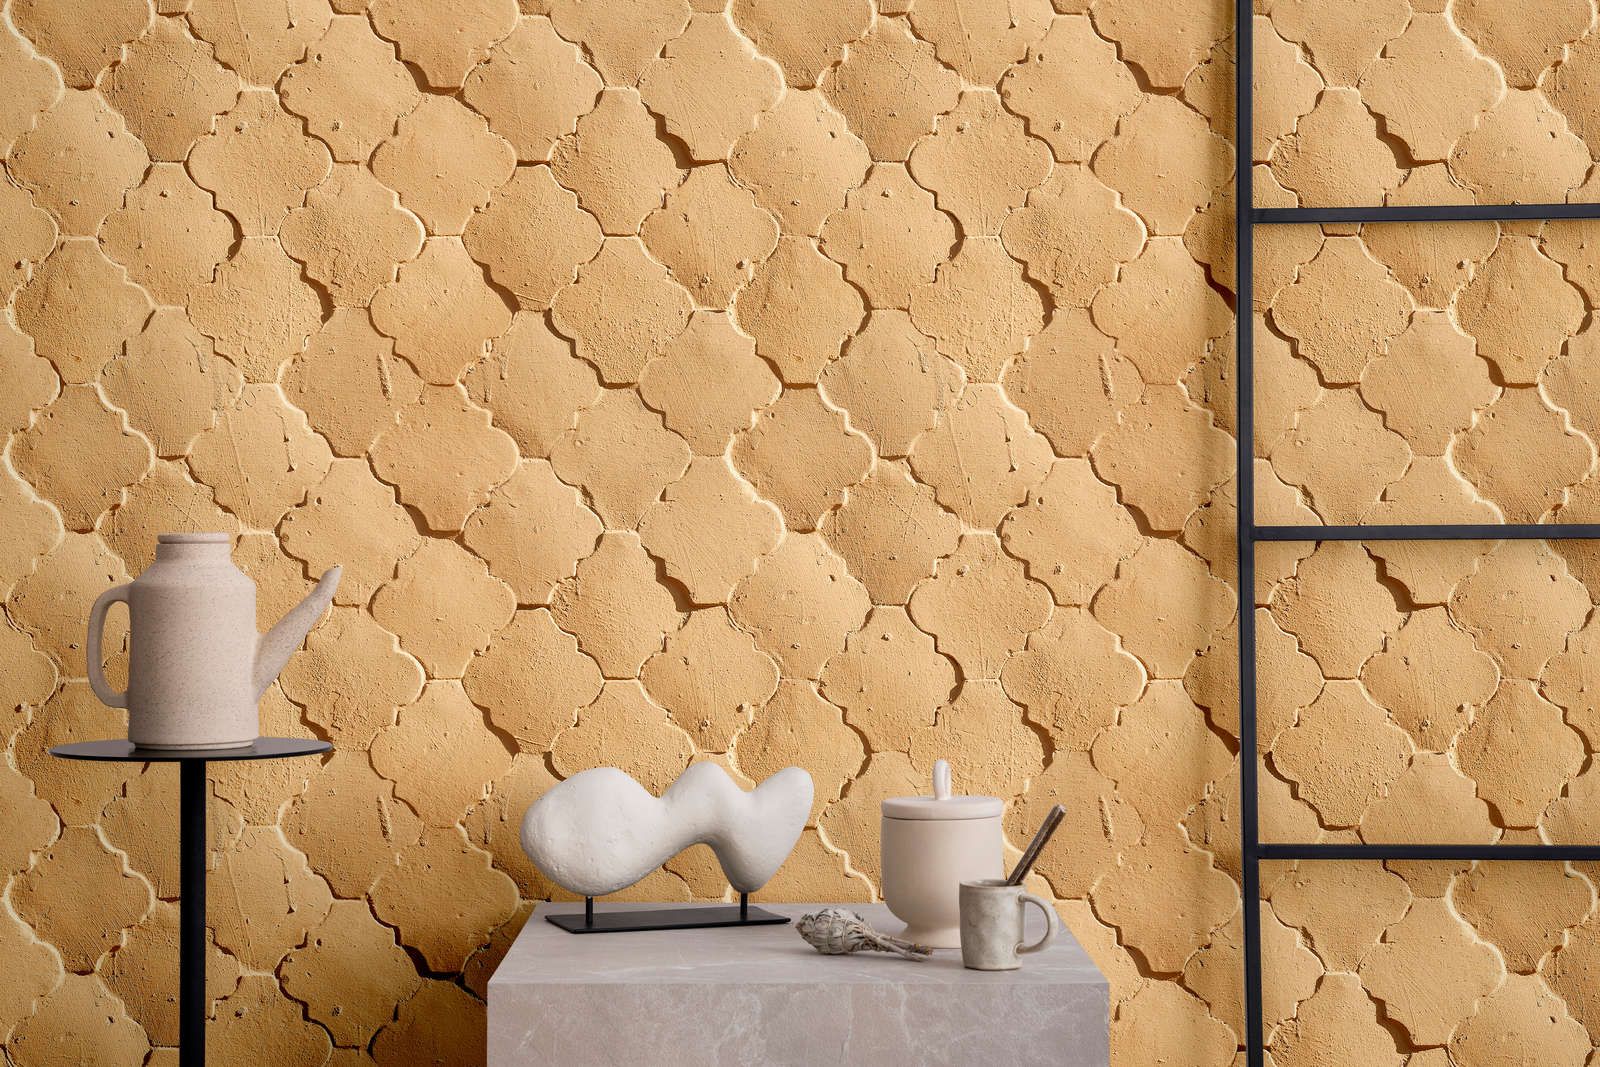             Fotomuralis »siena« - Motivo mediterraneo a piastrelle nei colori della sabbia - Materiali non tessuto opaco e liscio
        